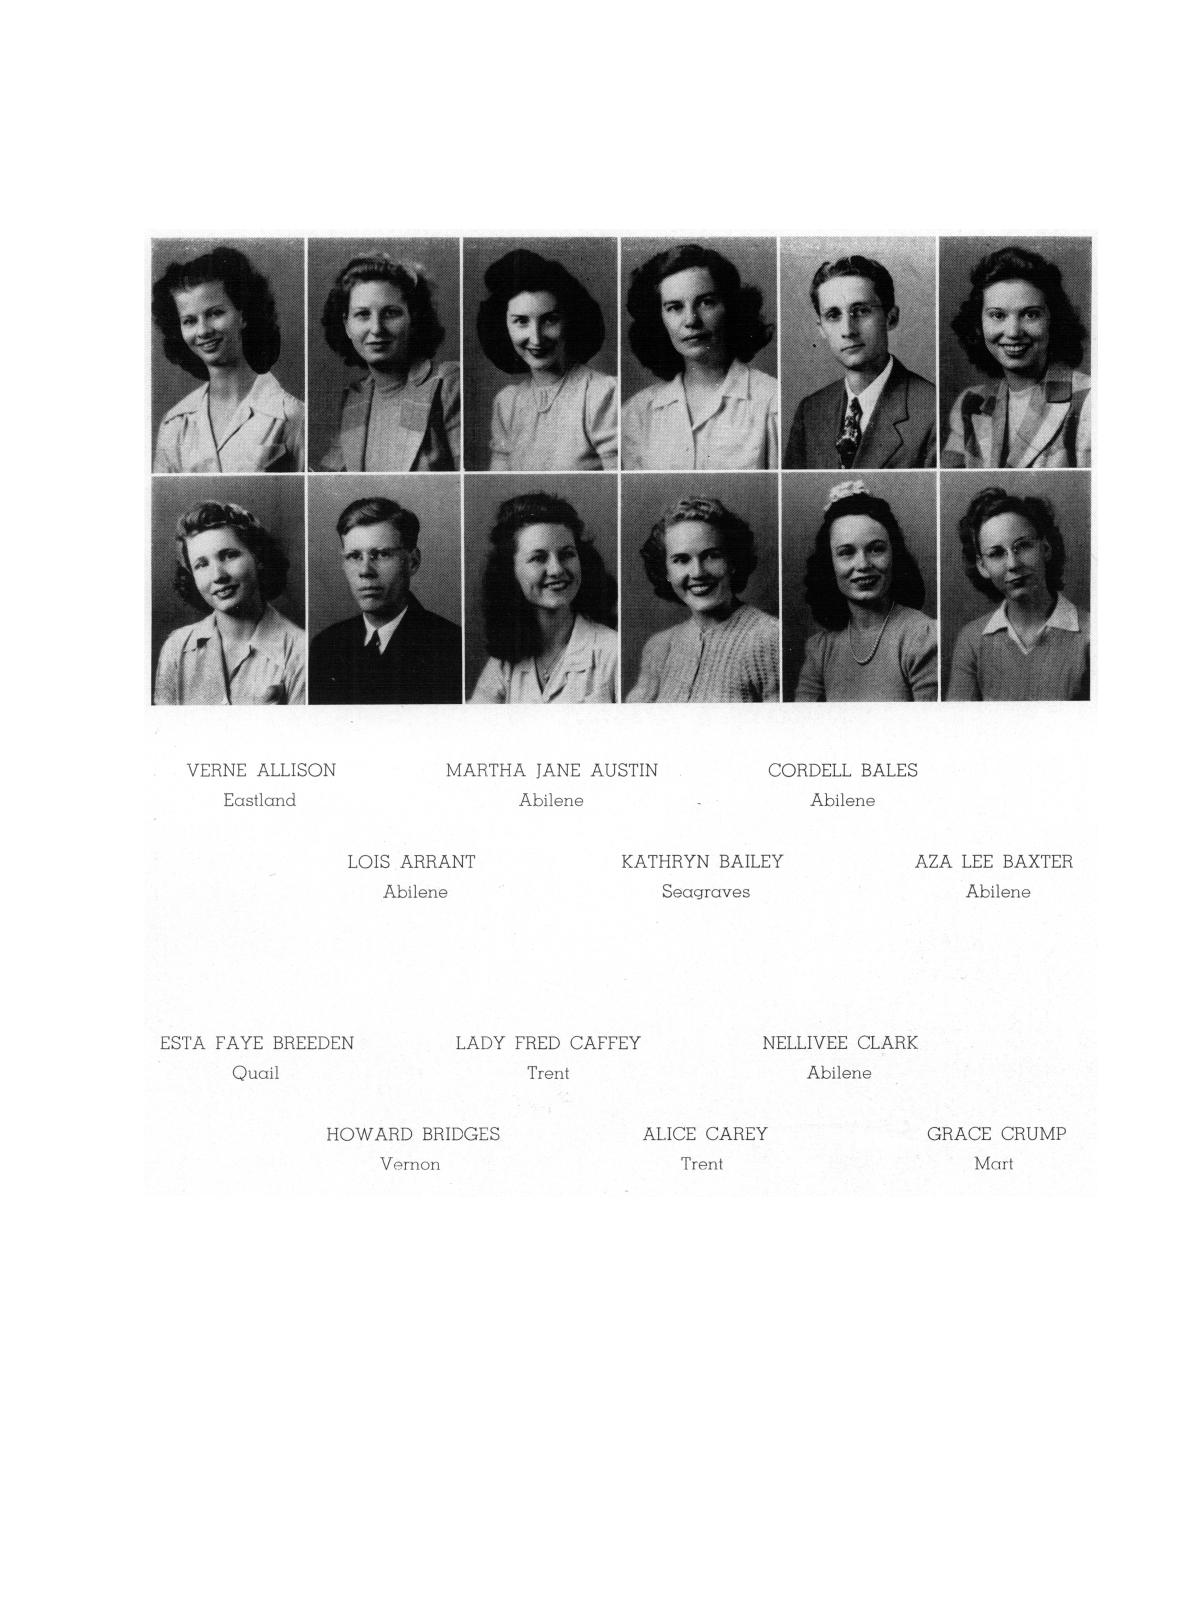 The Bronco, Yearbook of Hardin-Simmons University, 1944
                                                
                                                    51
                                                